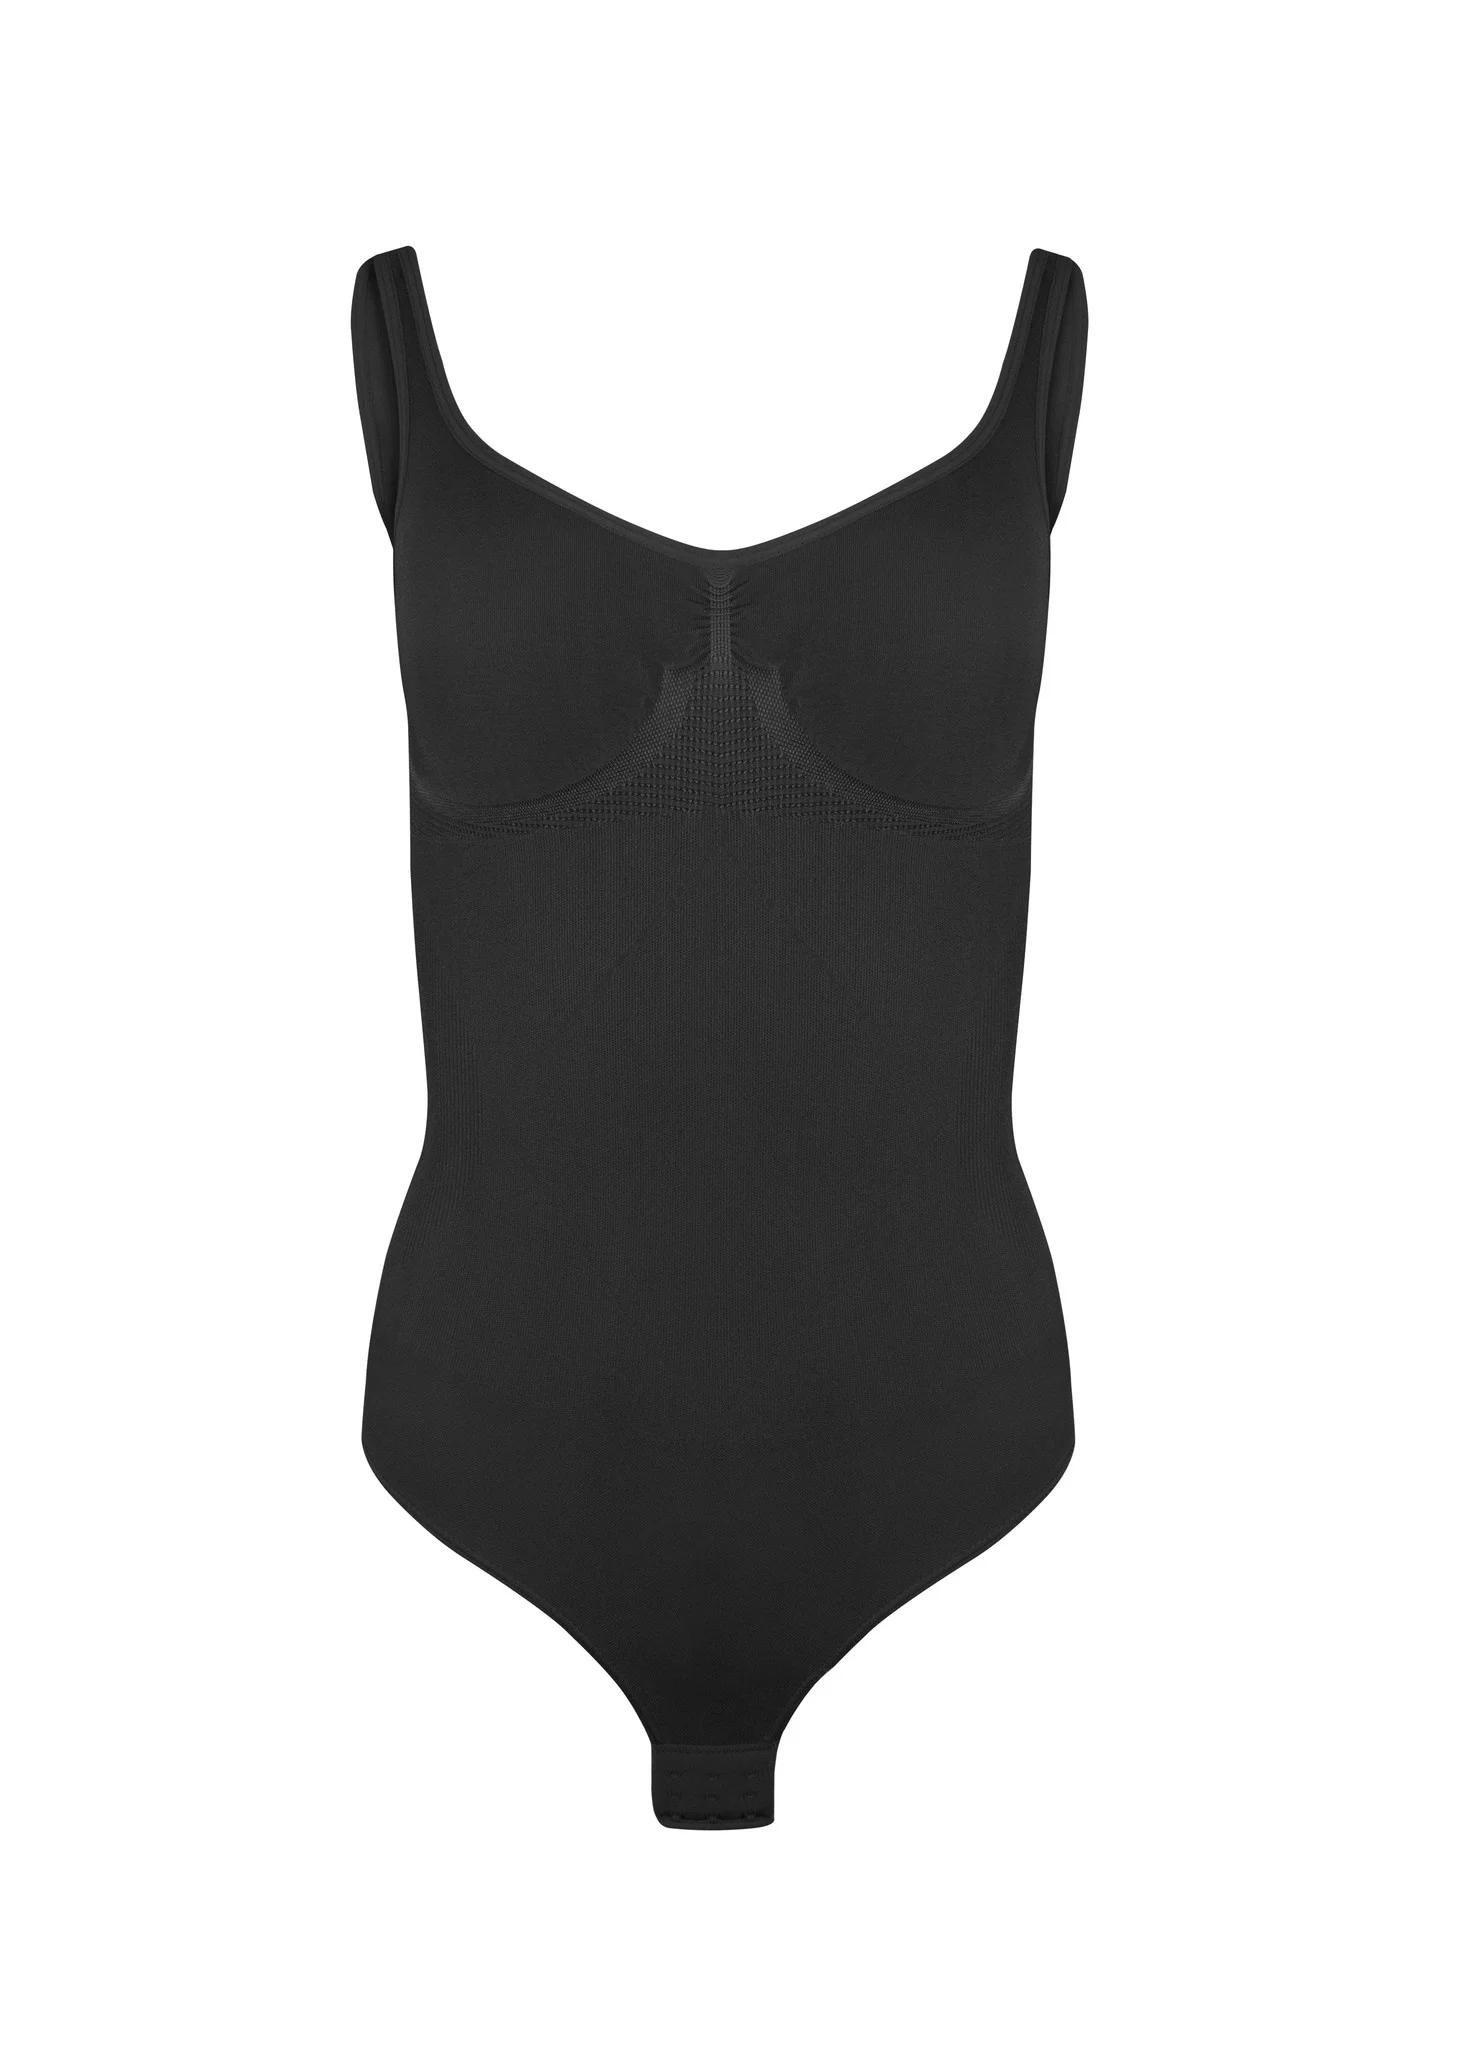 MAGIC BODYFASHION Bodysuit voor dames, lage rug, comfortabel en